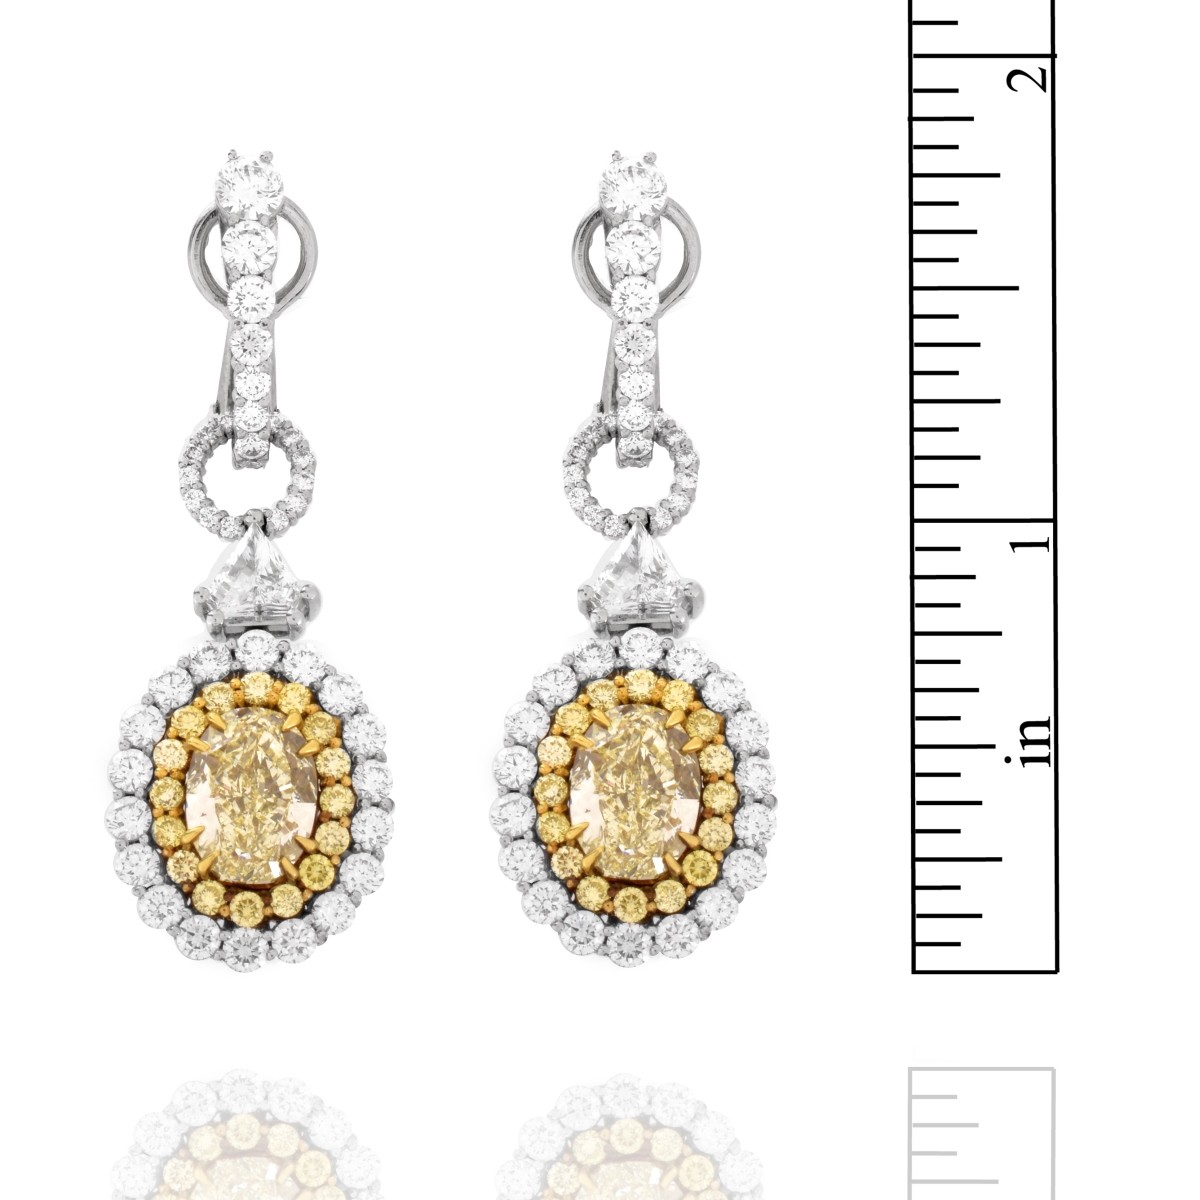 Fancy Yellow Diamond and Platinum Earrings